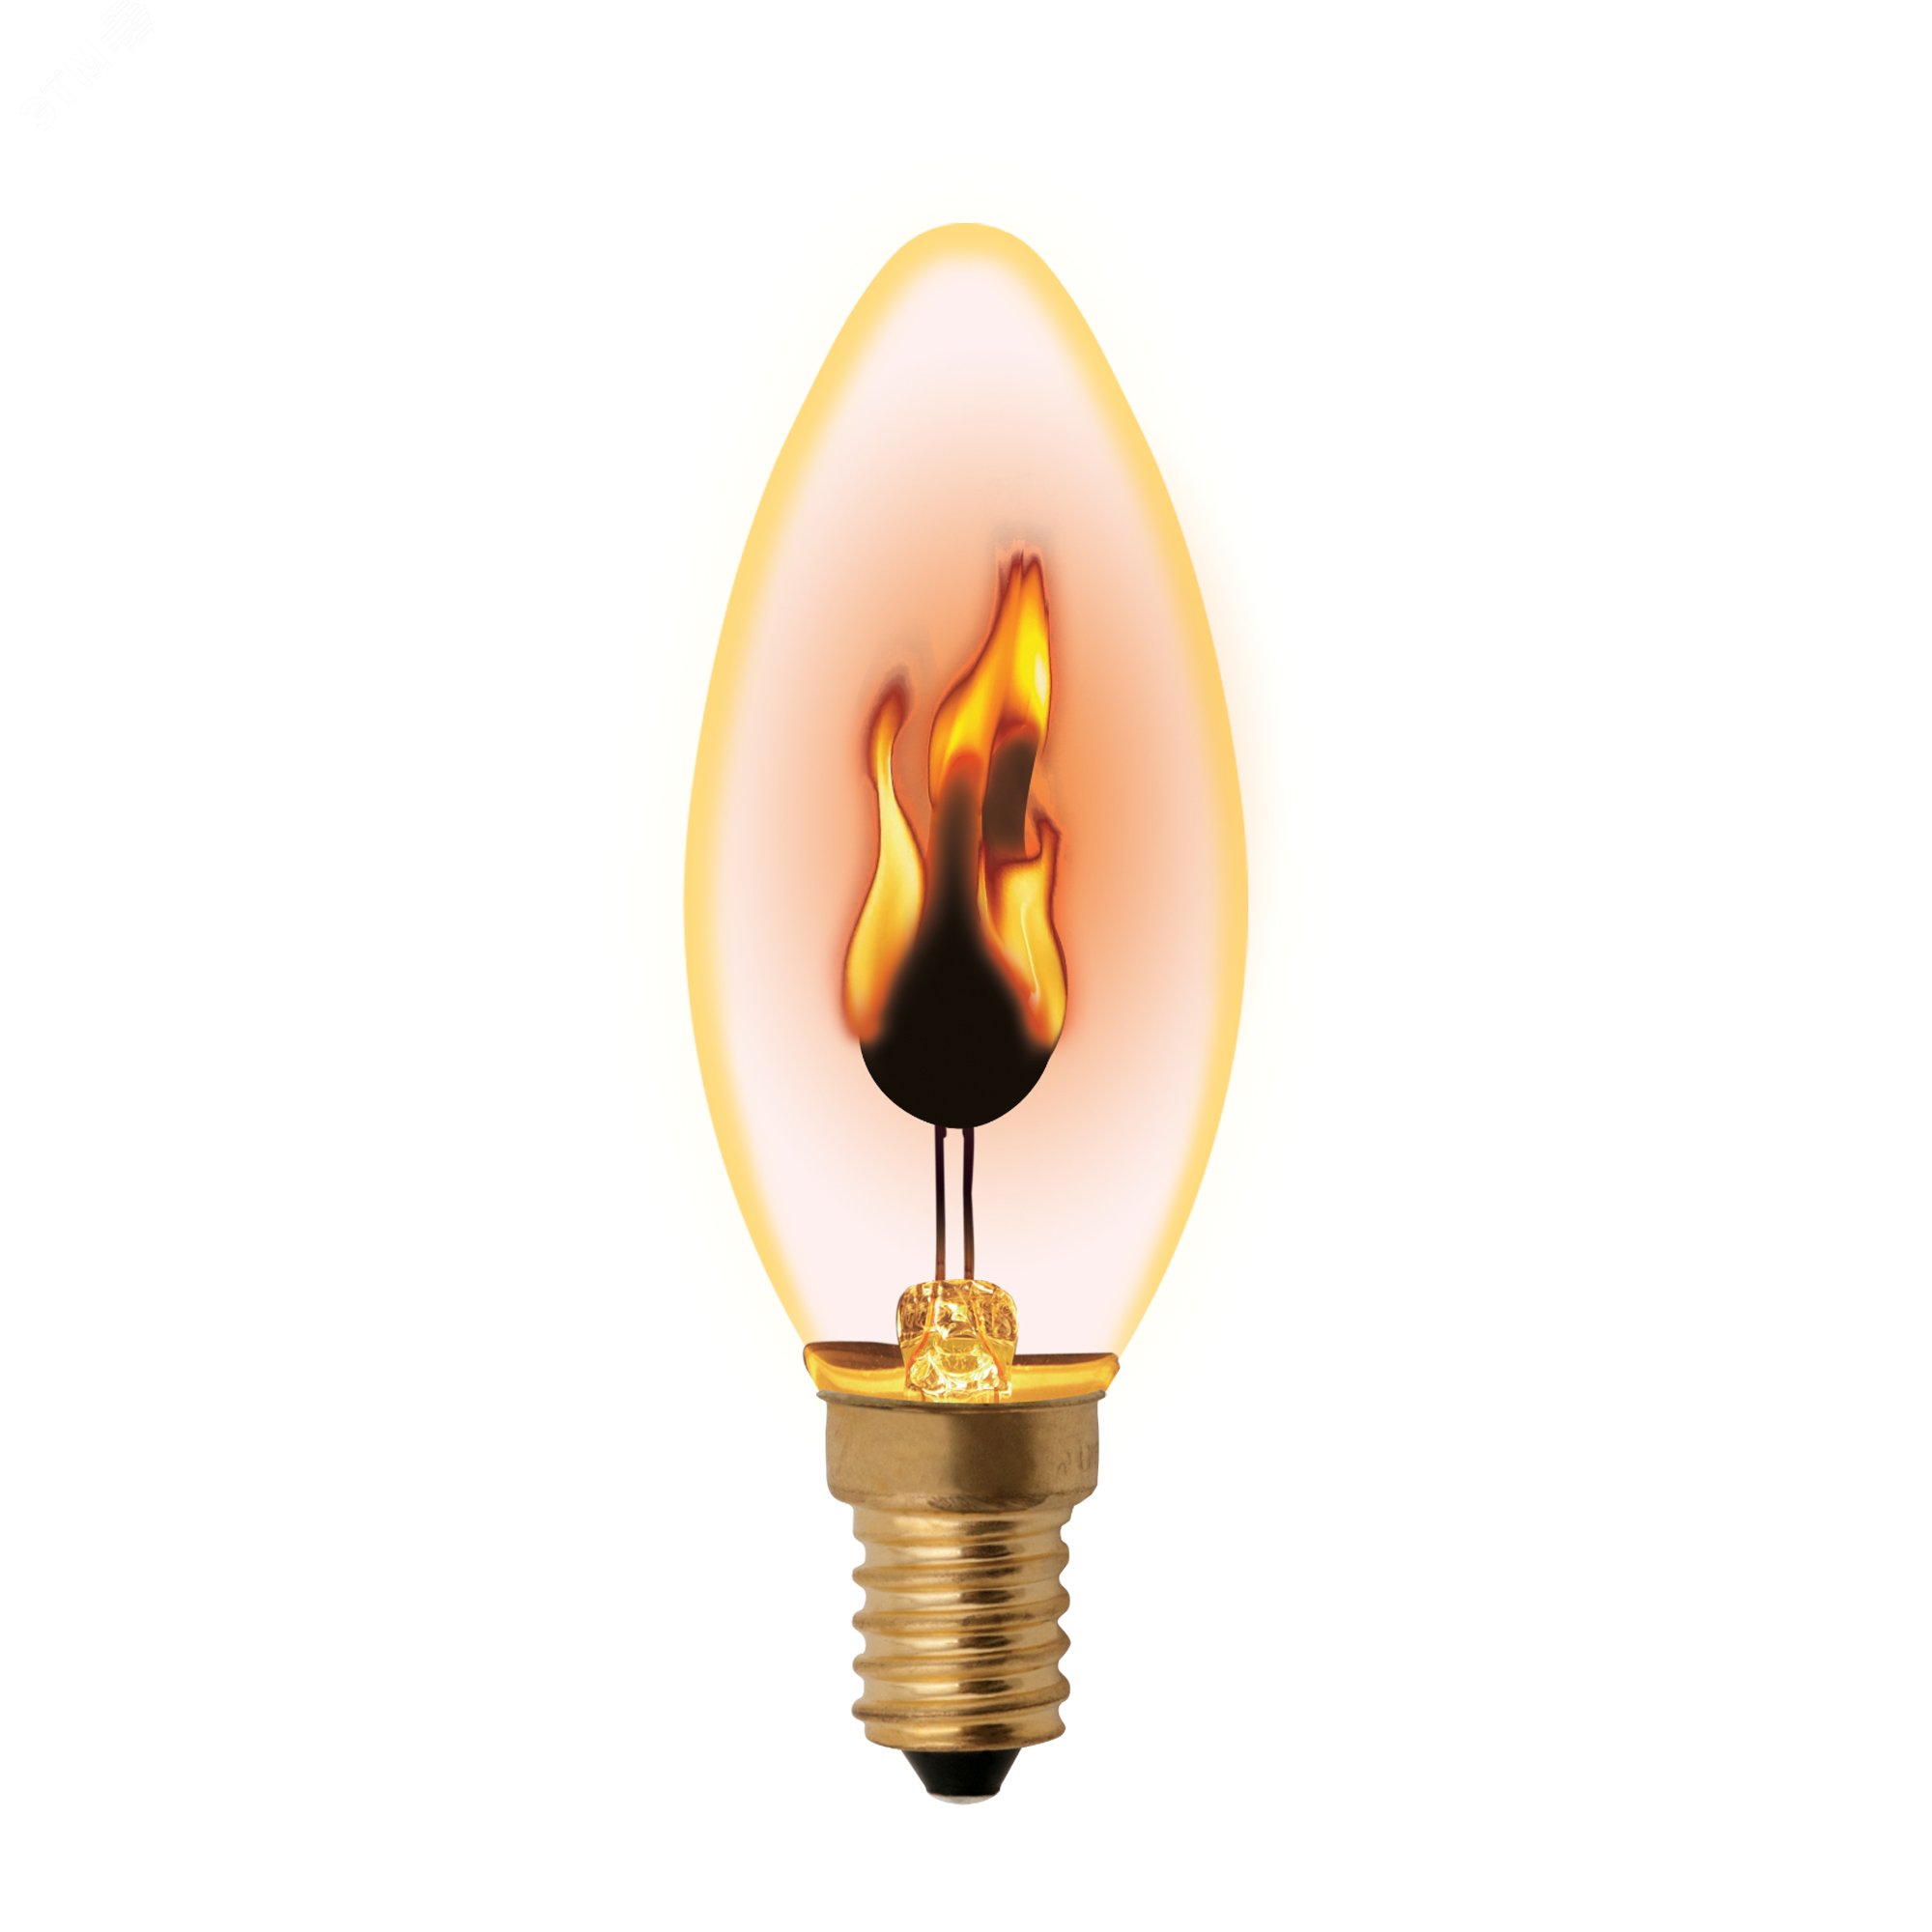 Лампа декоративная накаливания, форма свеча, IL-N-C35-3/RED-FLAME/E14 /CL, прозрачная UL-00002981 Uniel - превью